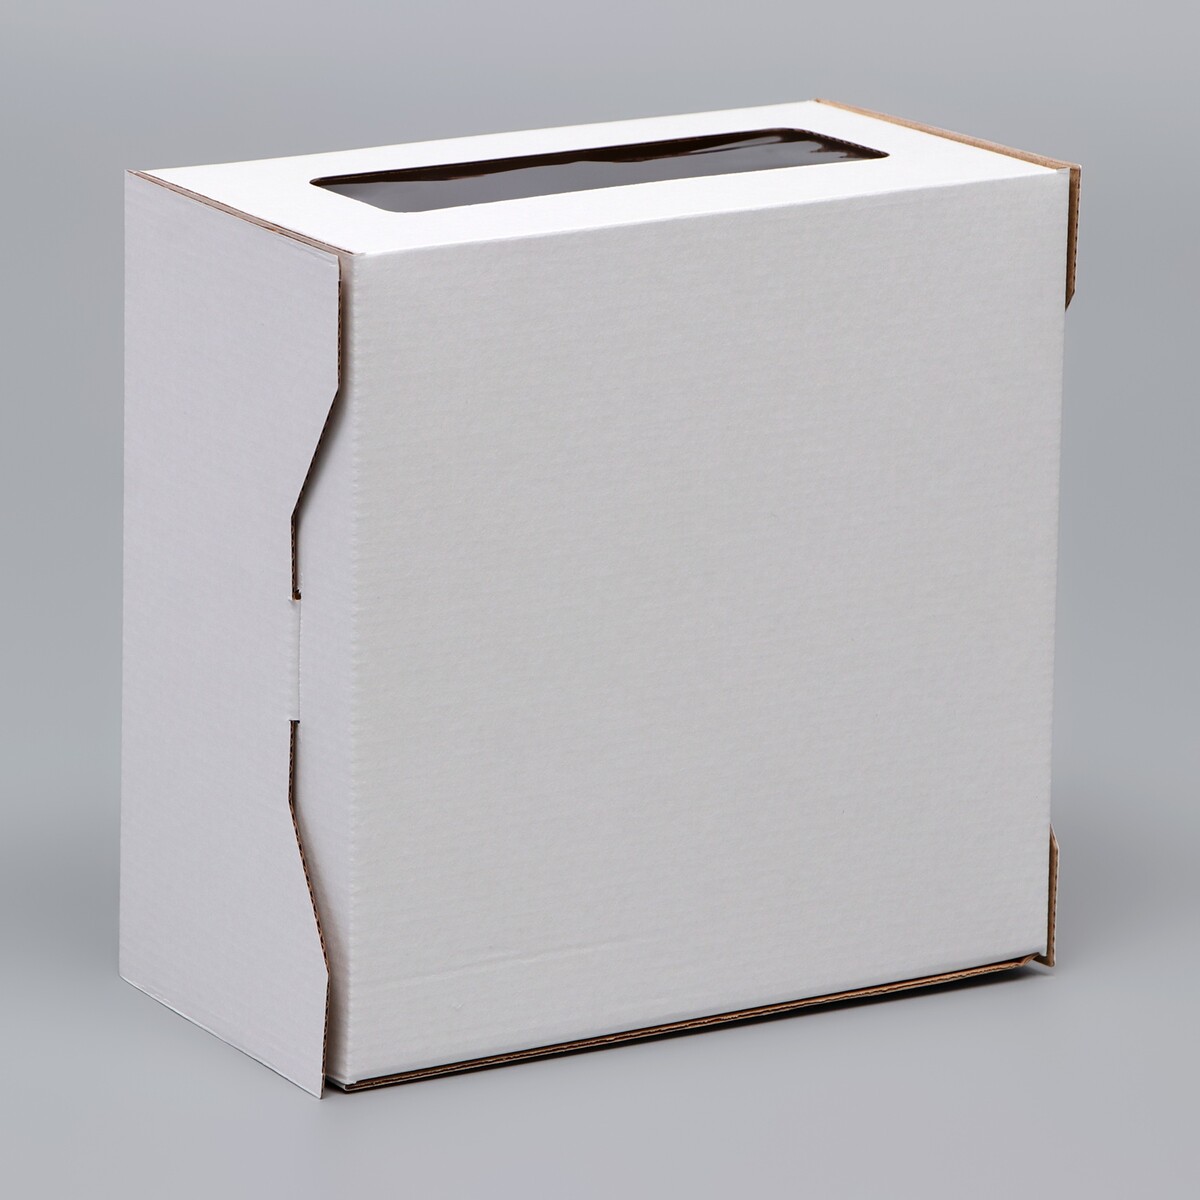 Коробка под торт 2 окна, с ручками, белая, 21 х 21 х 11 см UPAK LAND, цвет белый 011302549 - фото 3